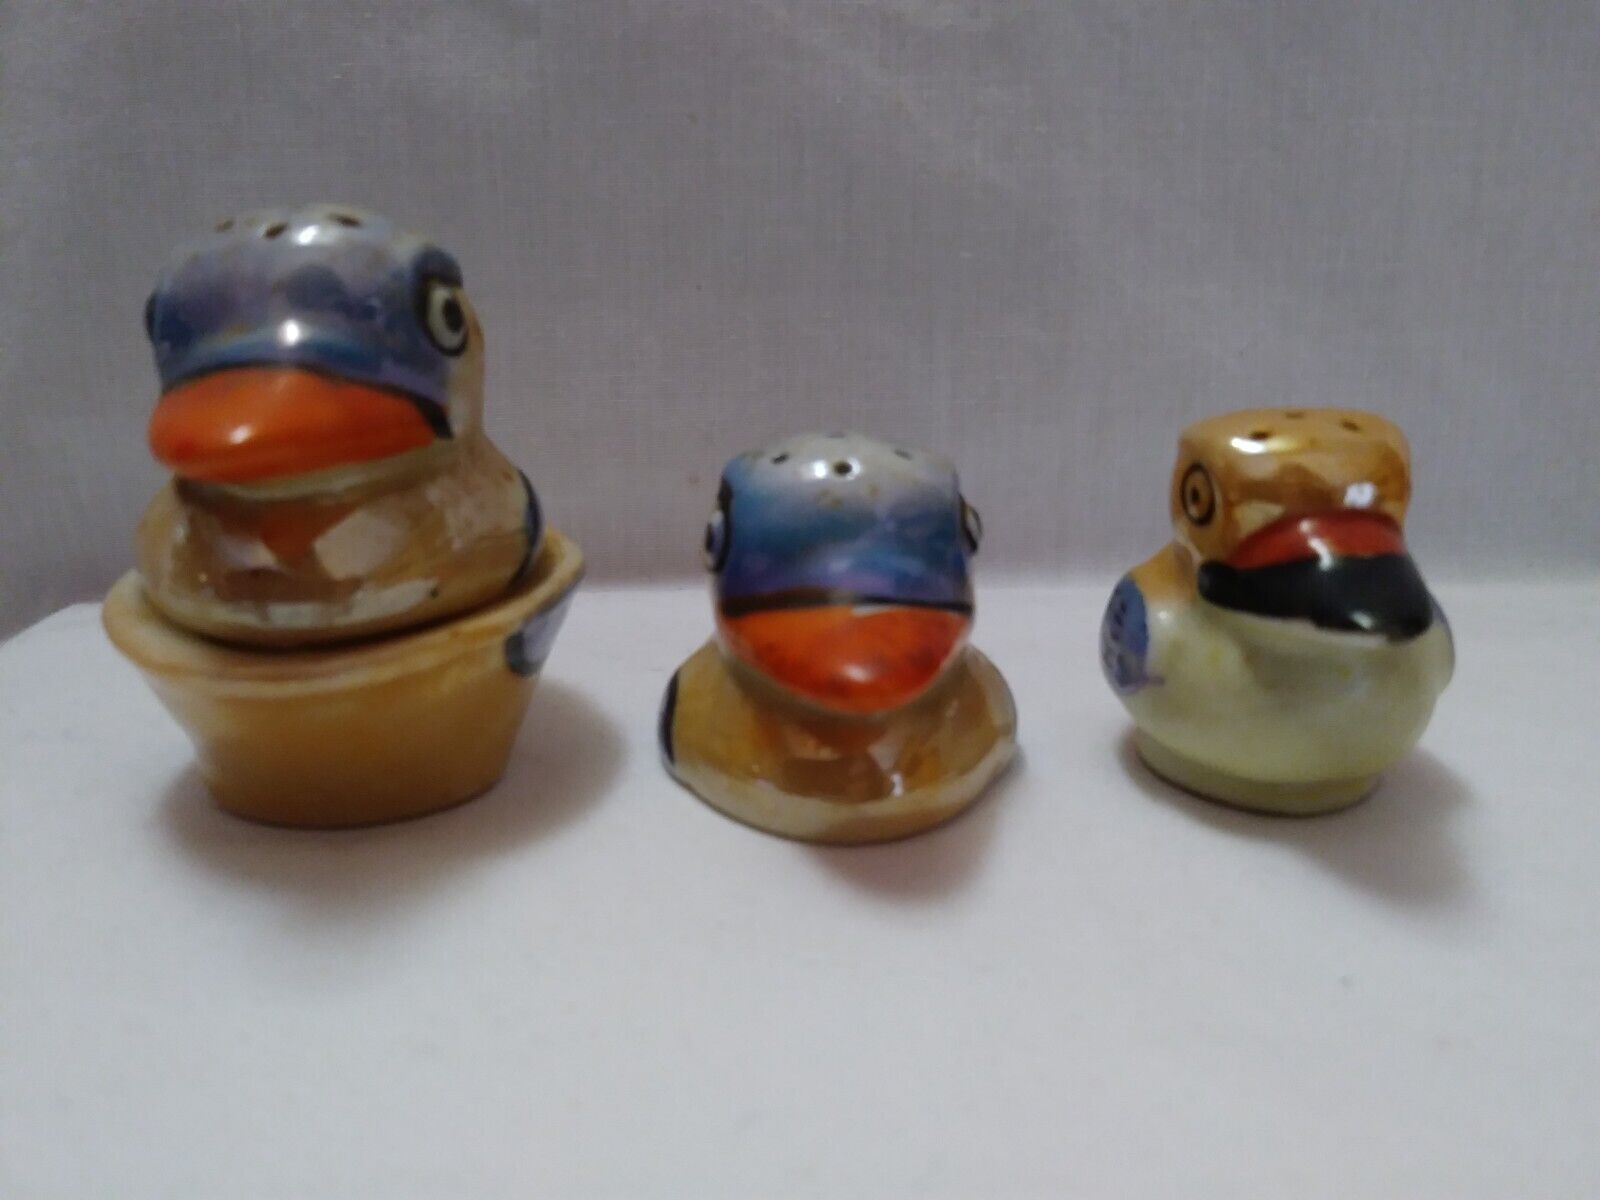 4 Piece Lot of Vintage Lusterware Kookaburra Birds Salt Pepper Shakers Japan